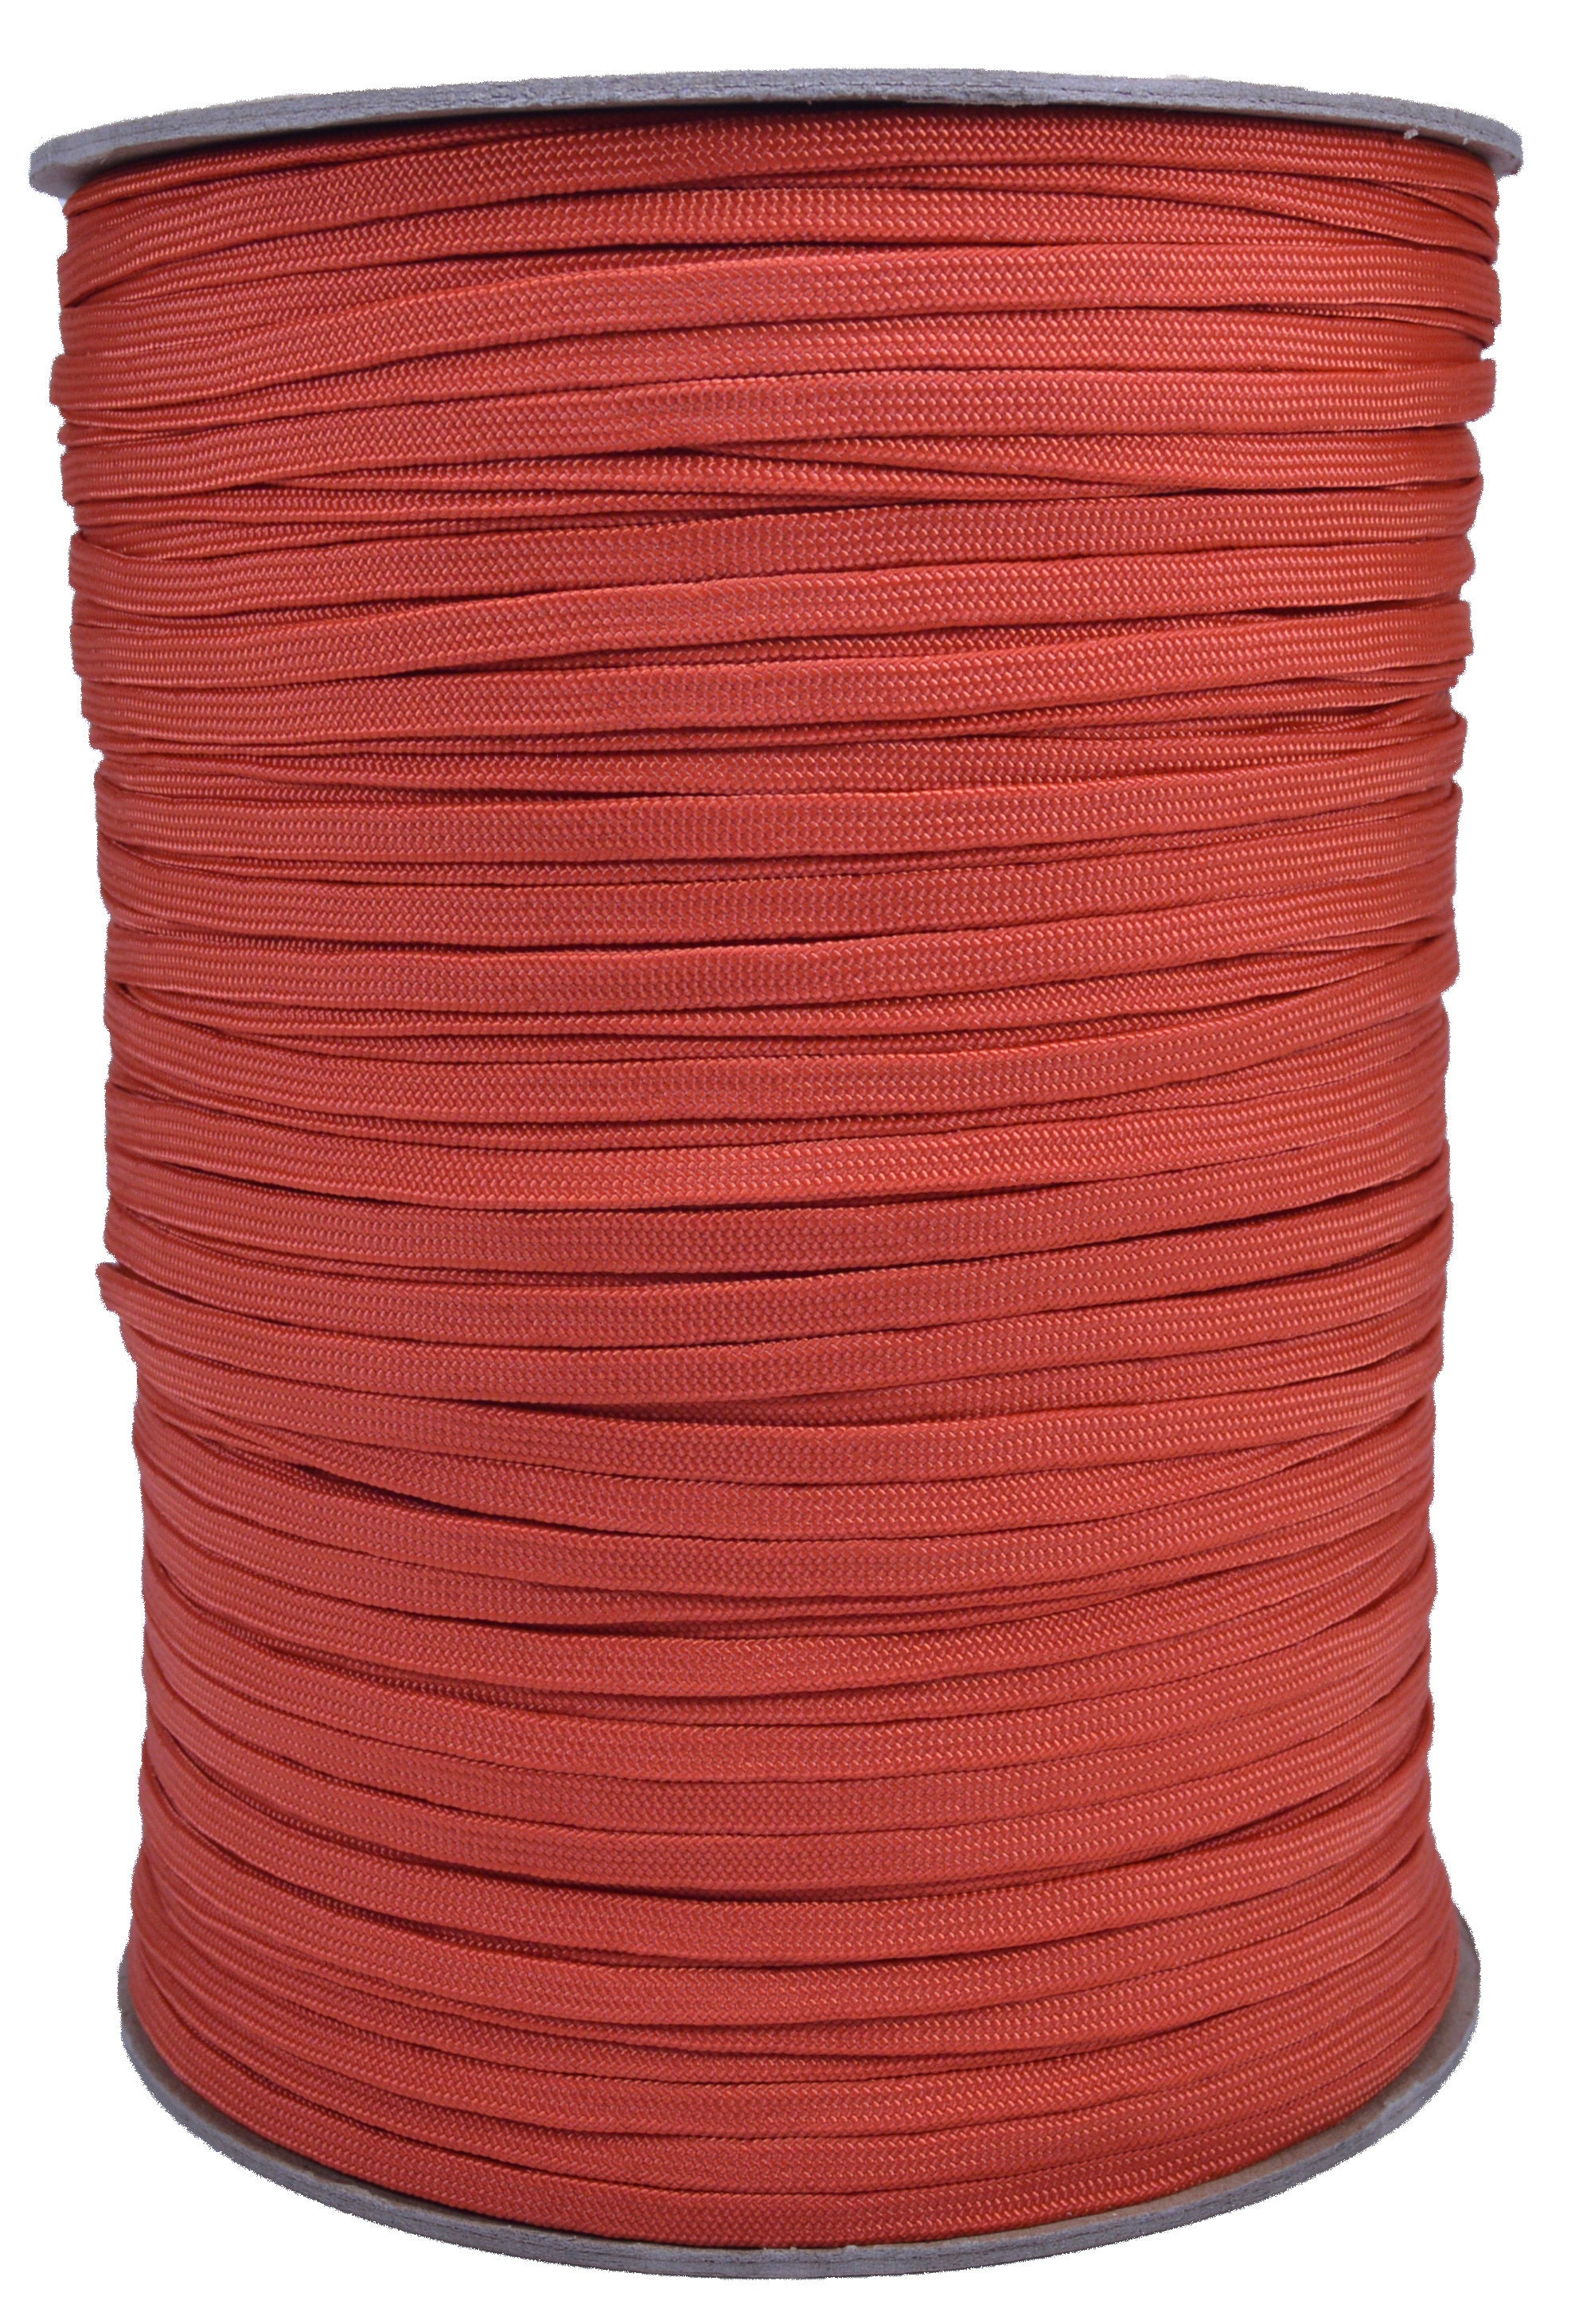 1/4” Nylon Paramax Rope International Orange Made in the USA Nylon/Nylon  (100 FT.)